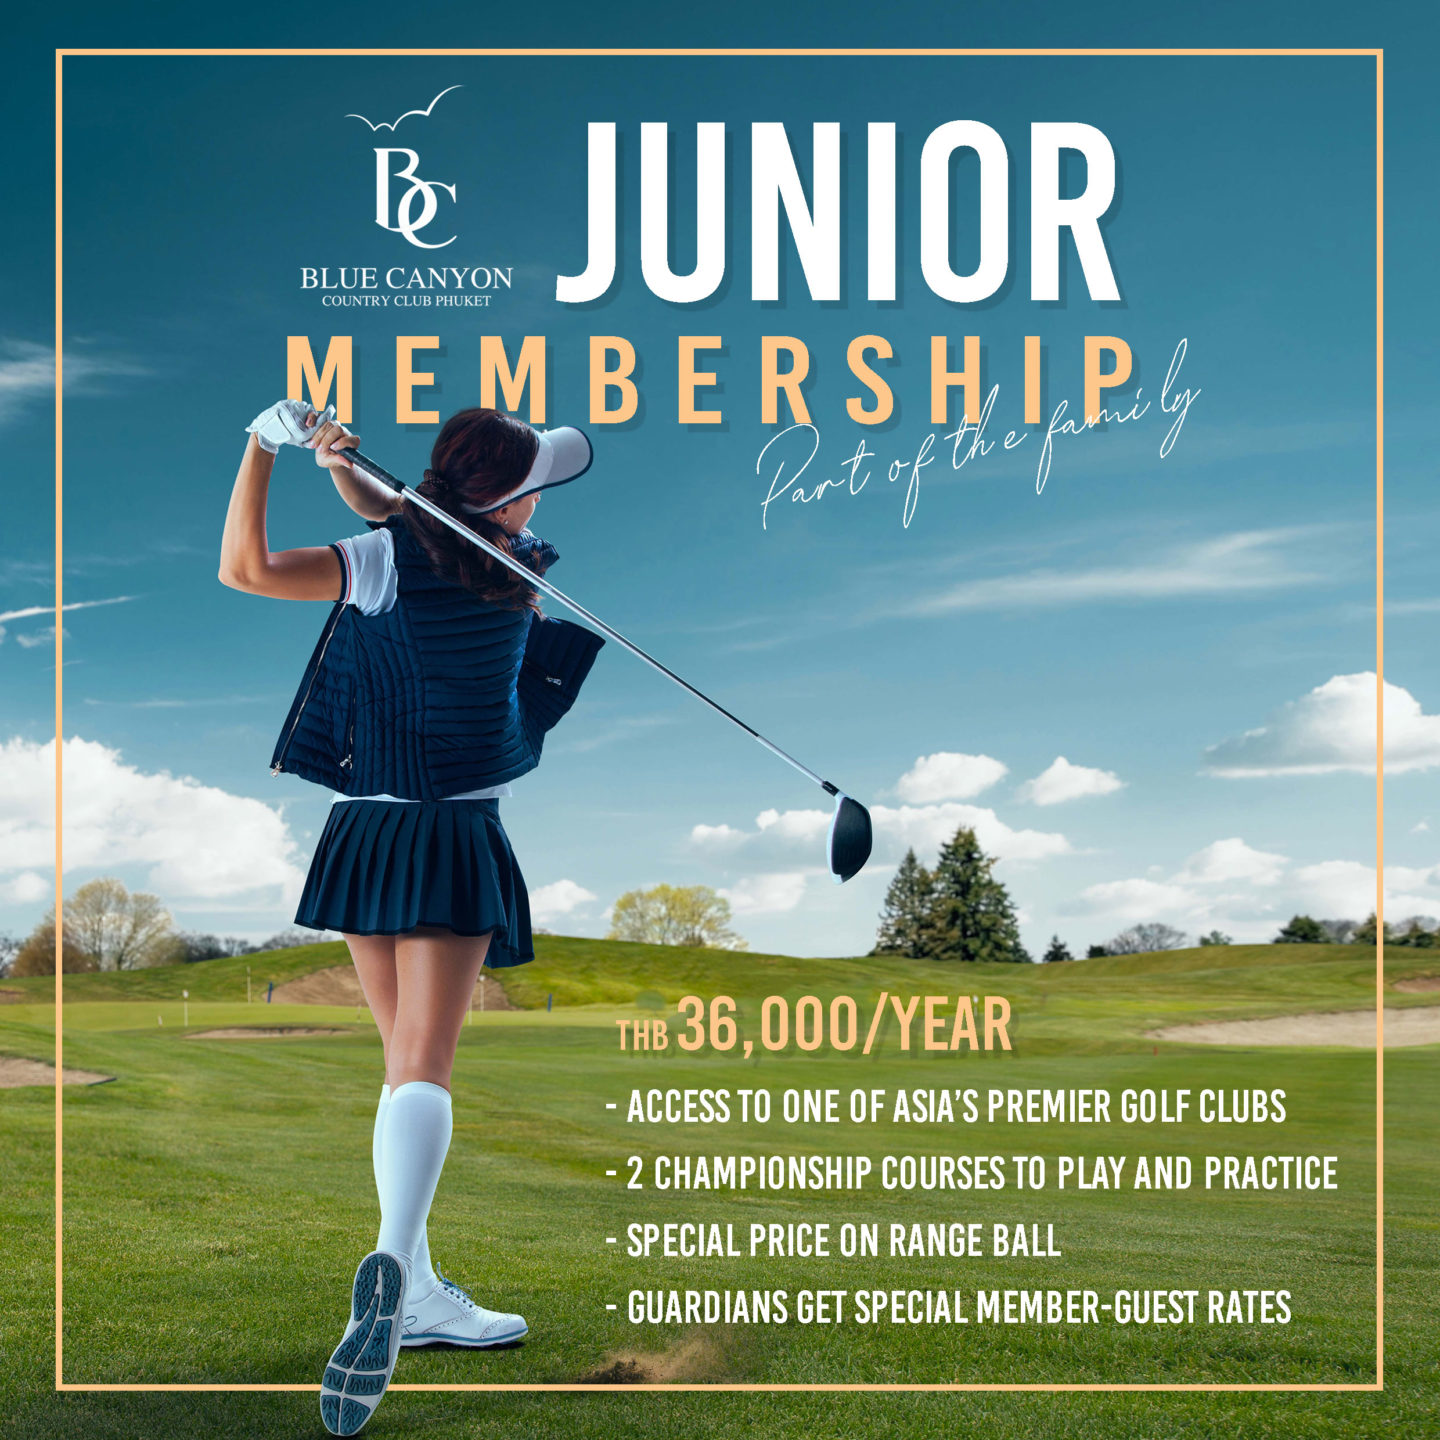 Junior Golf Membership